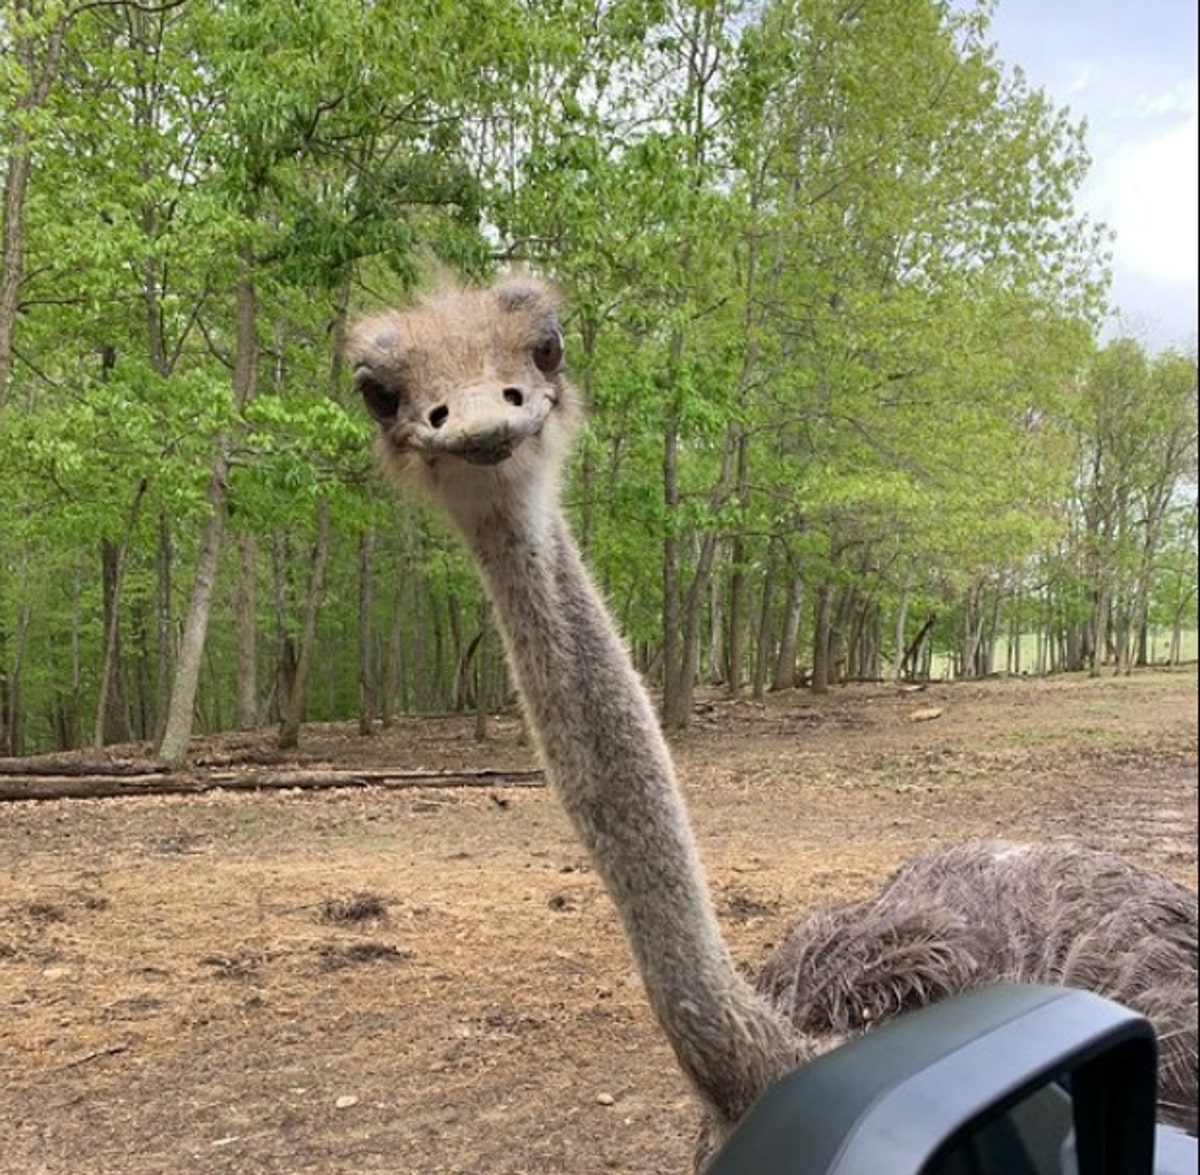 An Emu looking through someones car at Briarwood ranch safari in morristown